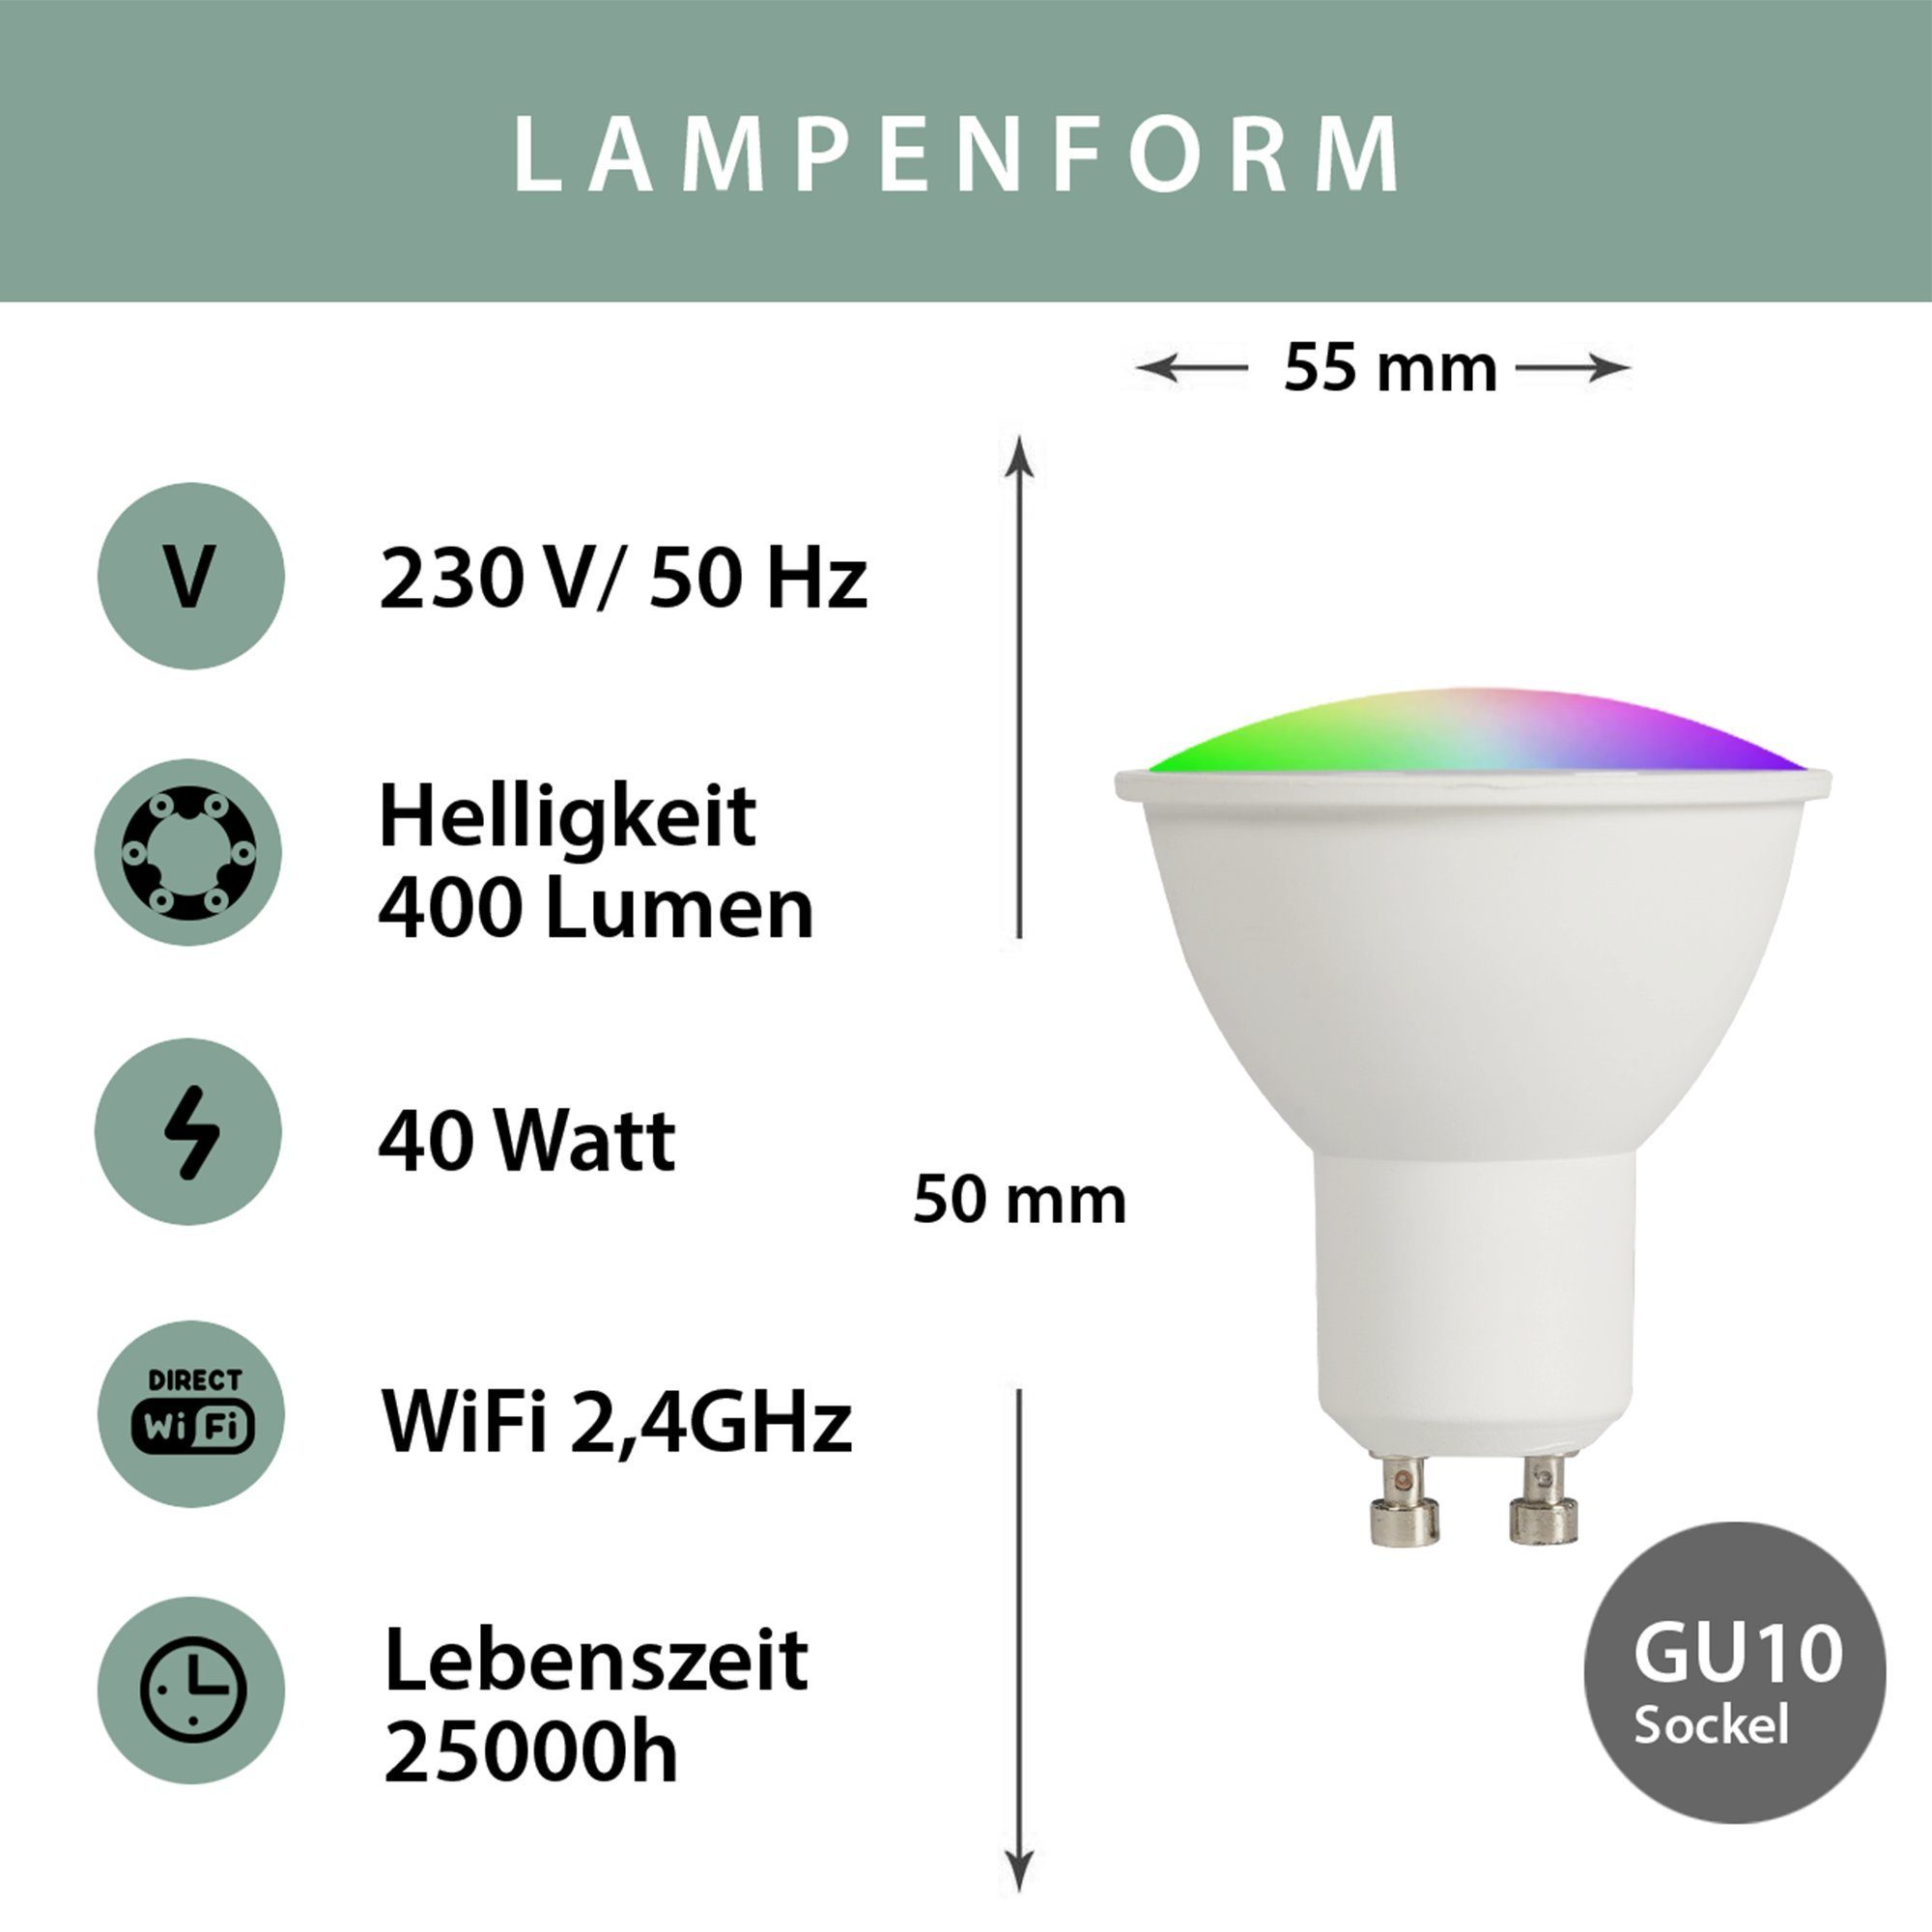 XCOAST LED-Leuchtmittel 2er PACK SMARTE GU10 LED 40W STRAHLER, 400 Lumen,  GU10, 2 St., WARMWEISS, KALTWEISS, BUNT, 2700 - 6500K, SMART HOME LED  Strahler, WLAN, Sprach-/Appsteuerung, dimmbar